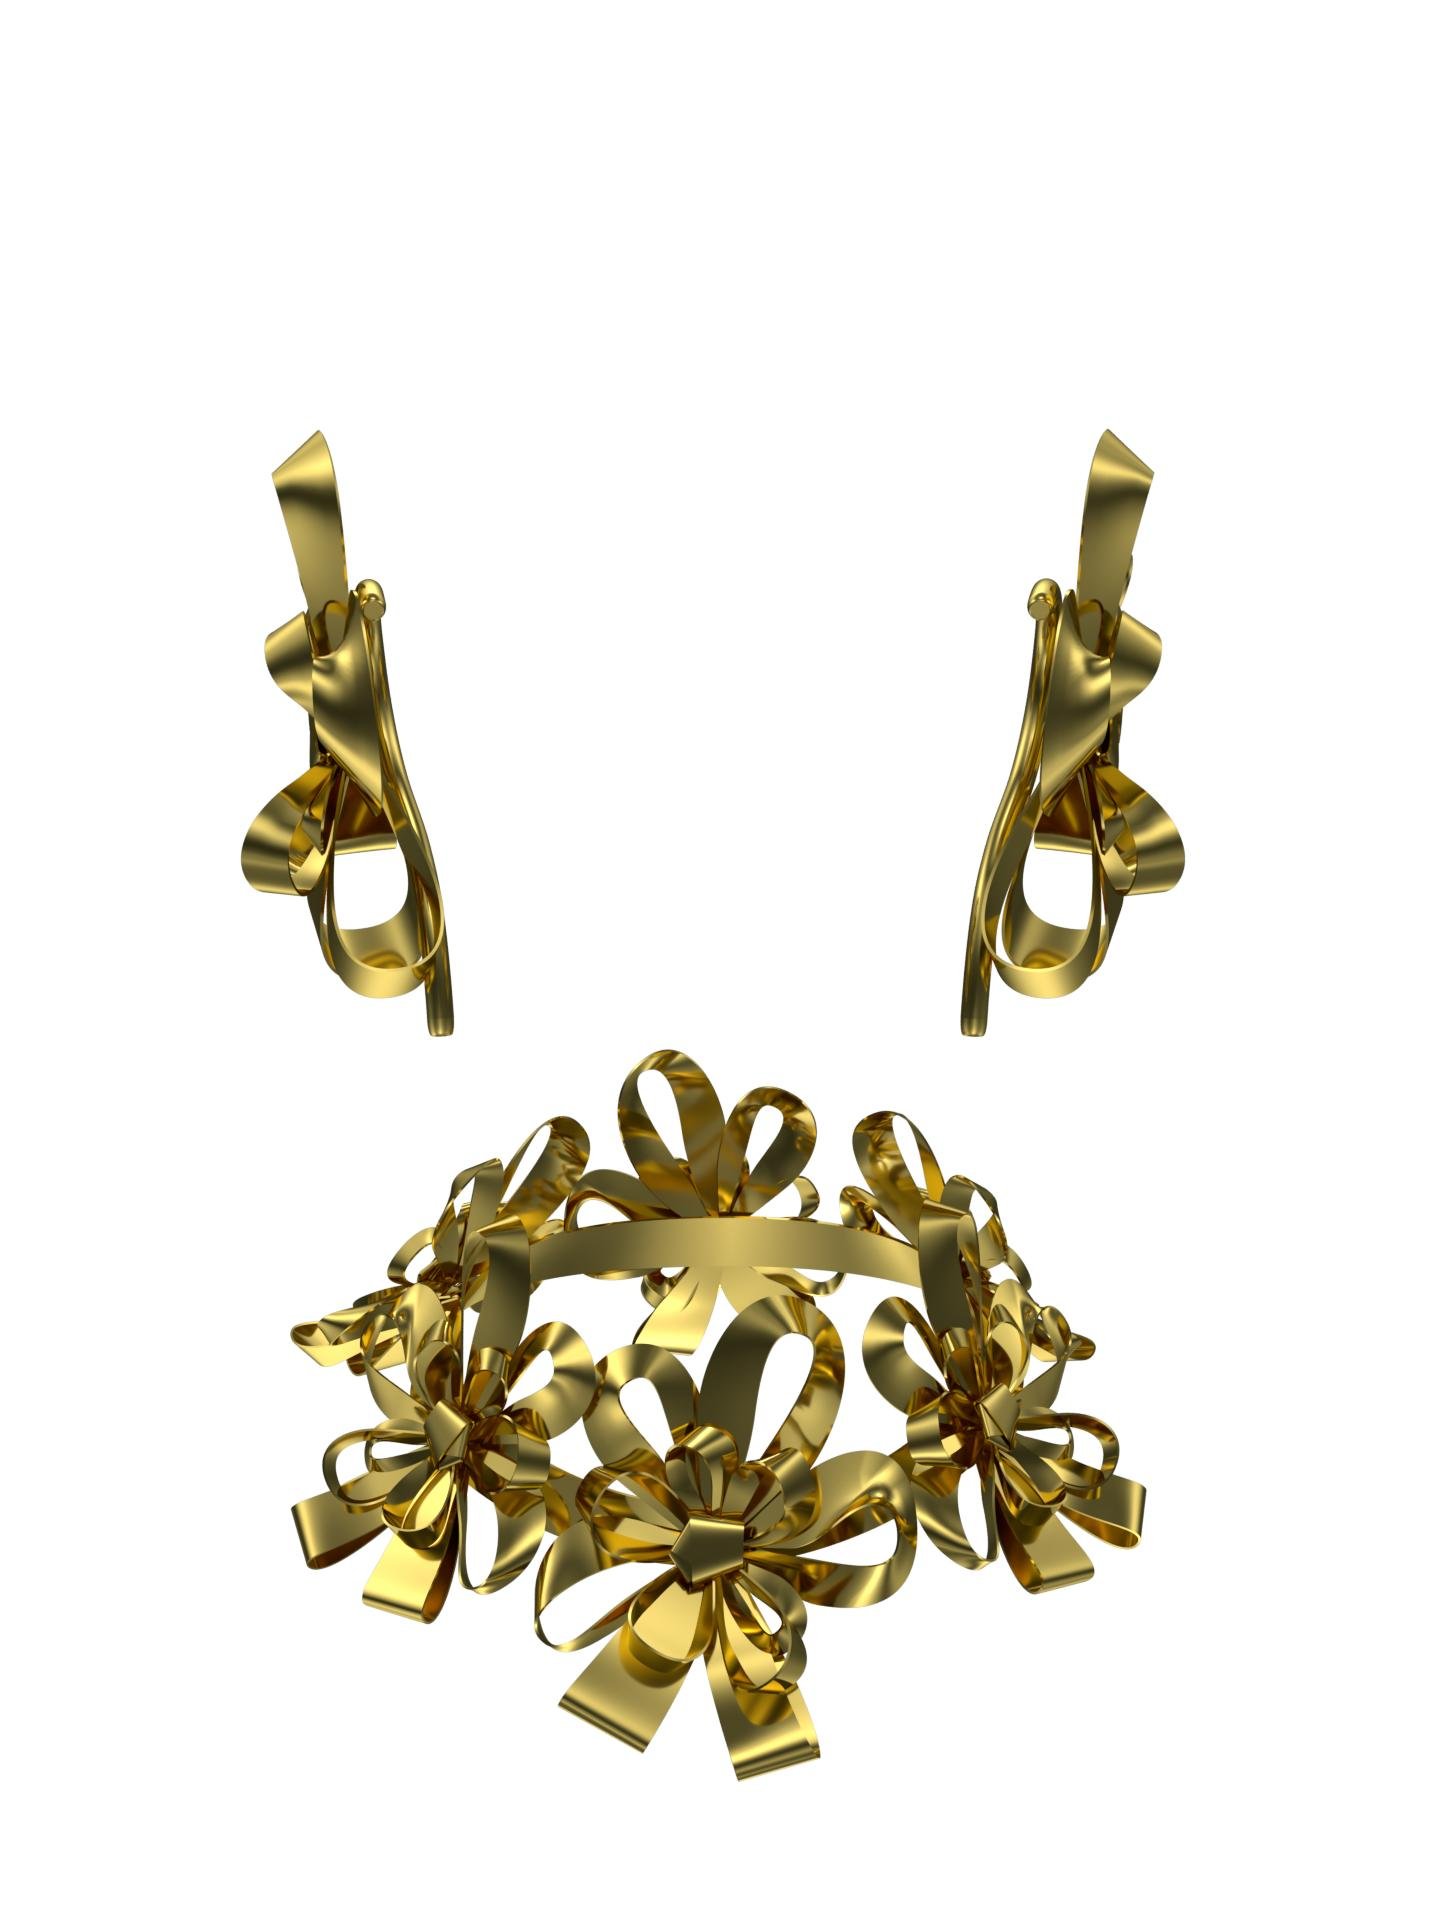 Golden Ribbon Flower Clips & Necklace by CELINE KWAN